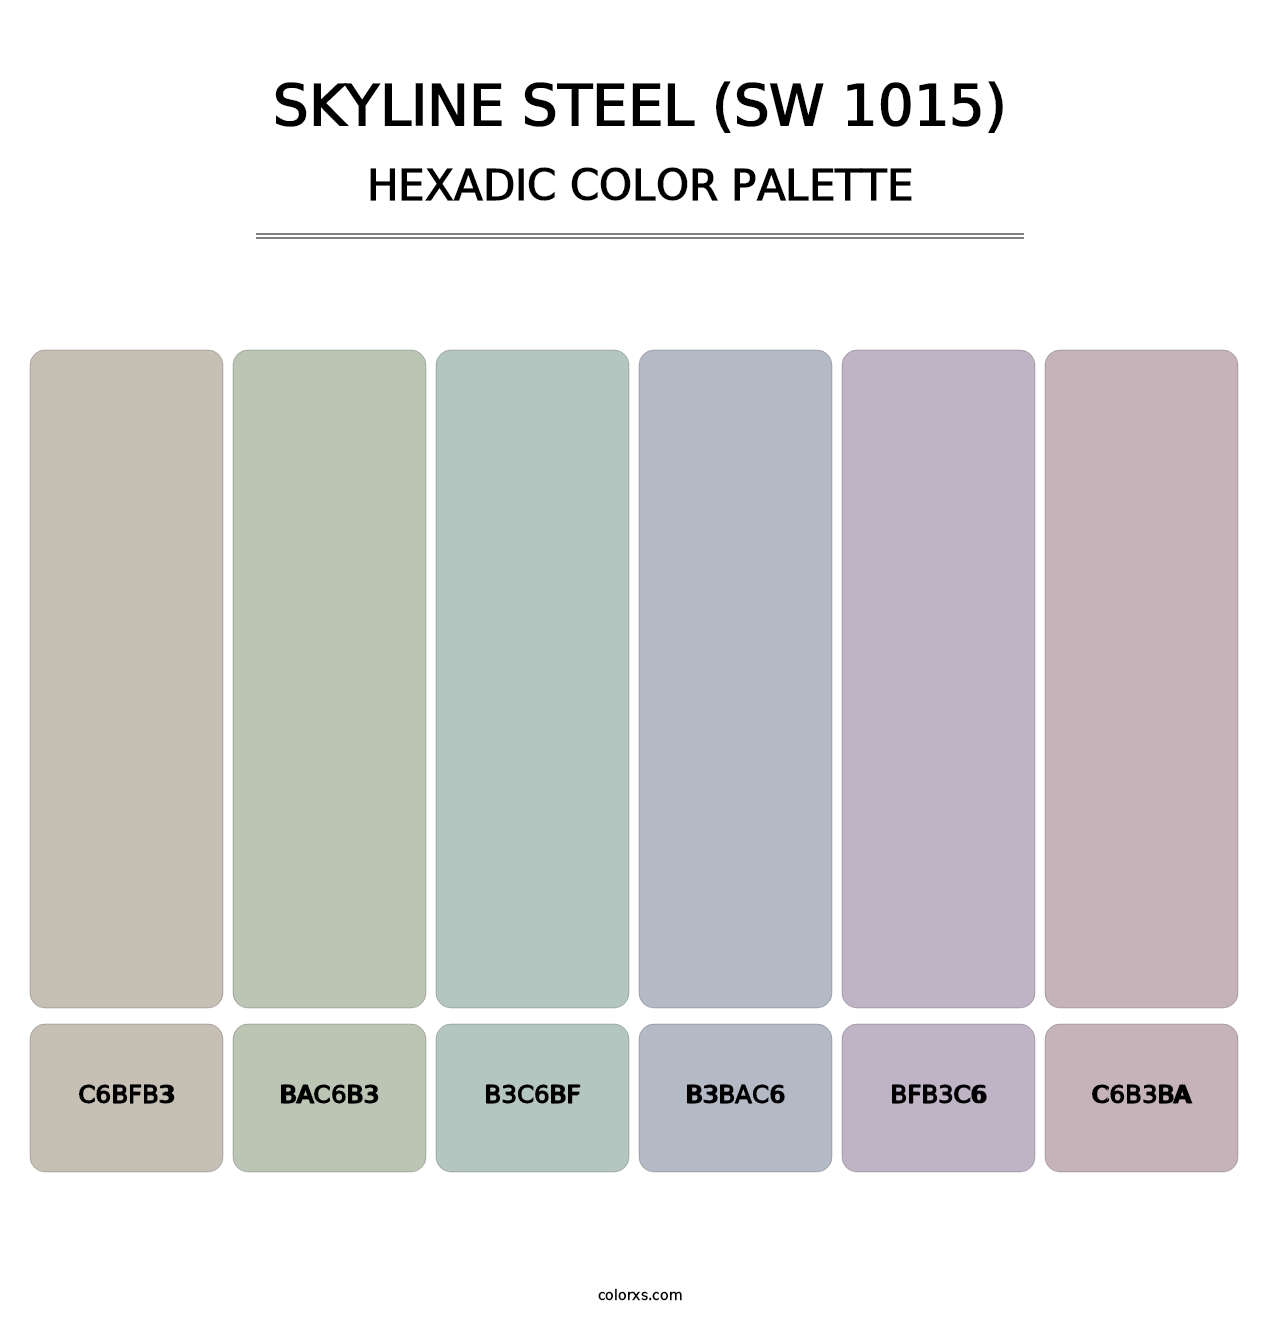 Skyline Steel (SW 1015) - Hexadic Color Palette